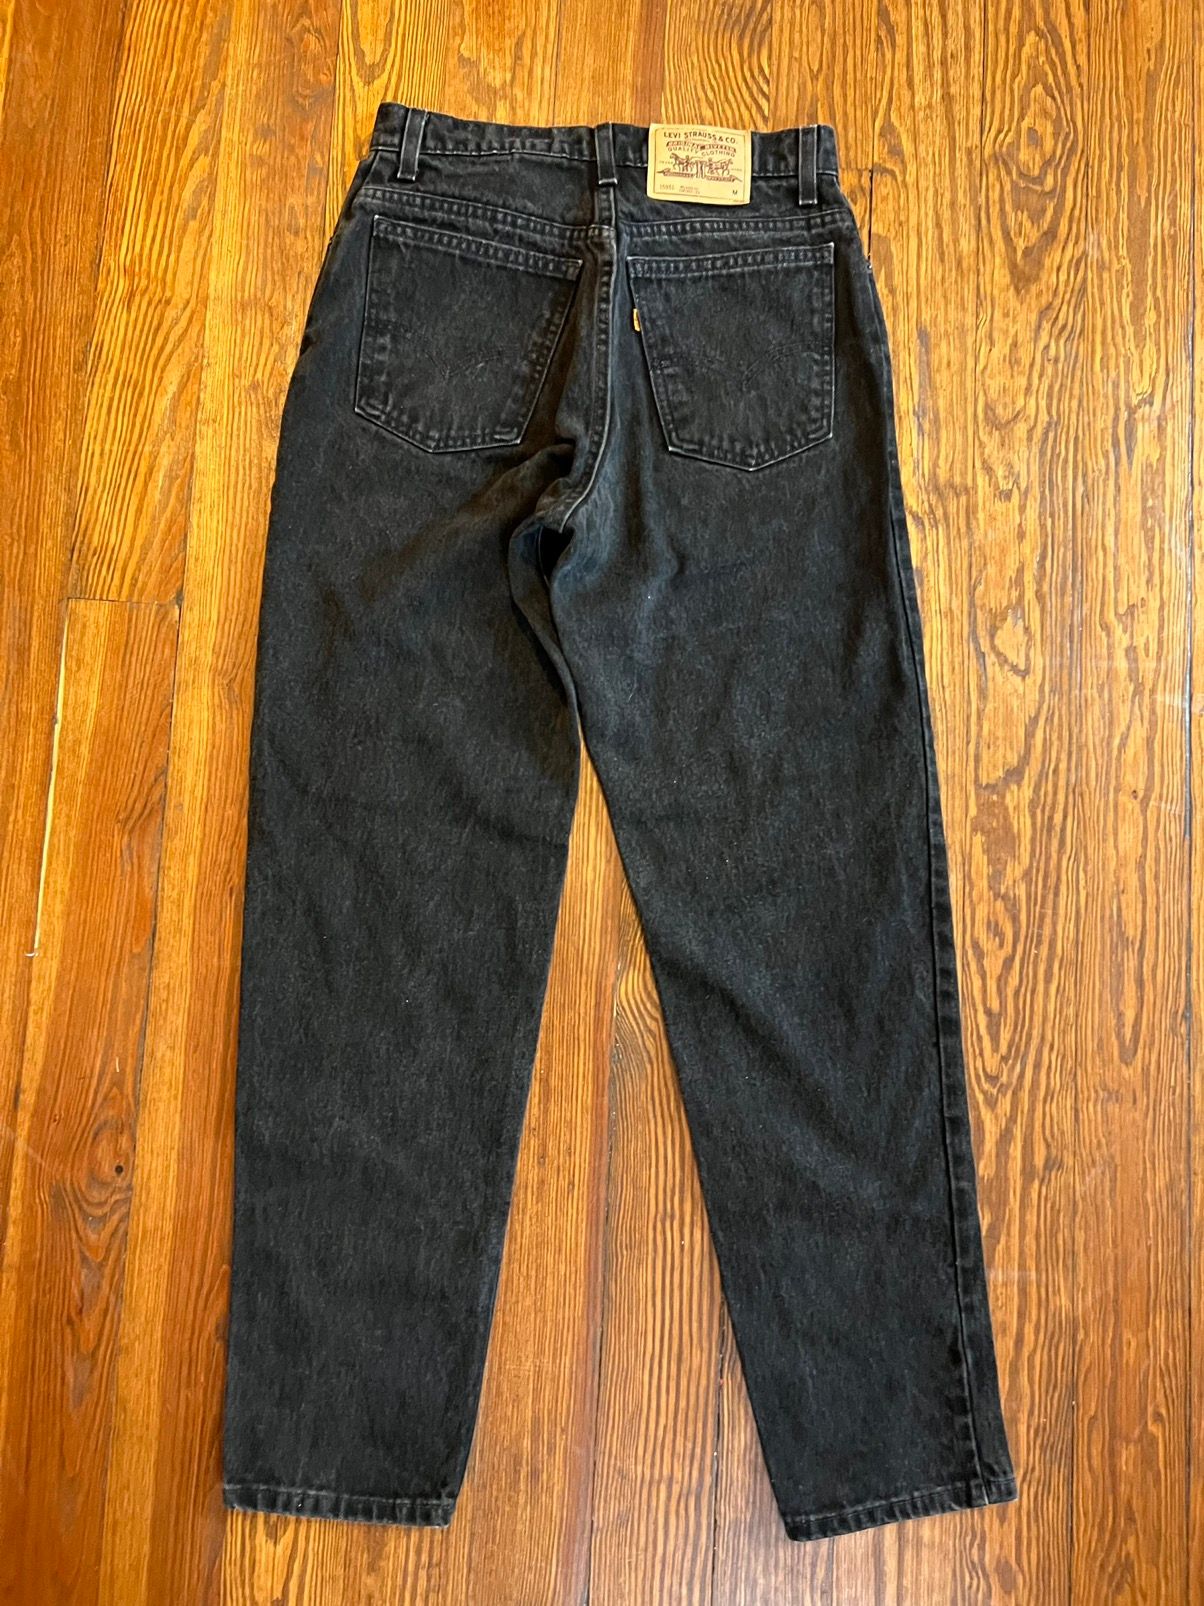 Vintage Vintage Levi’s 951 Black Denim Jeans Made in USA Size US 29 - 4 Thumbnail